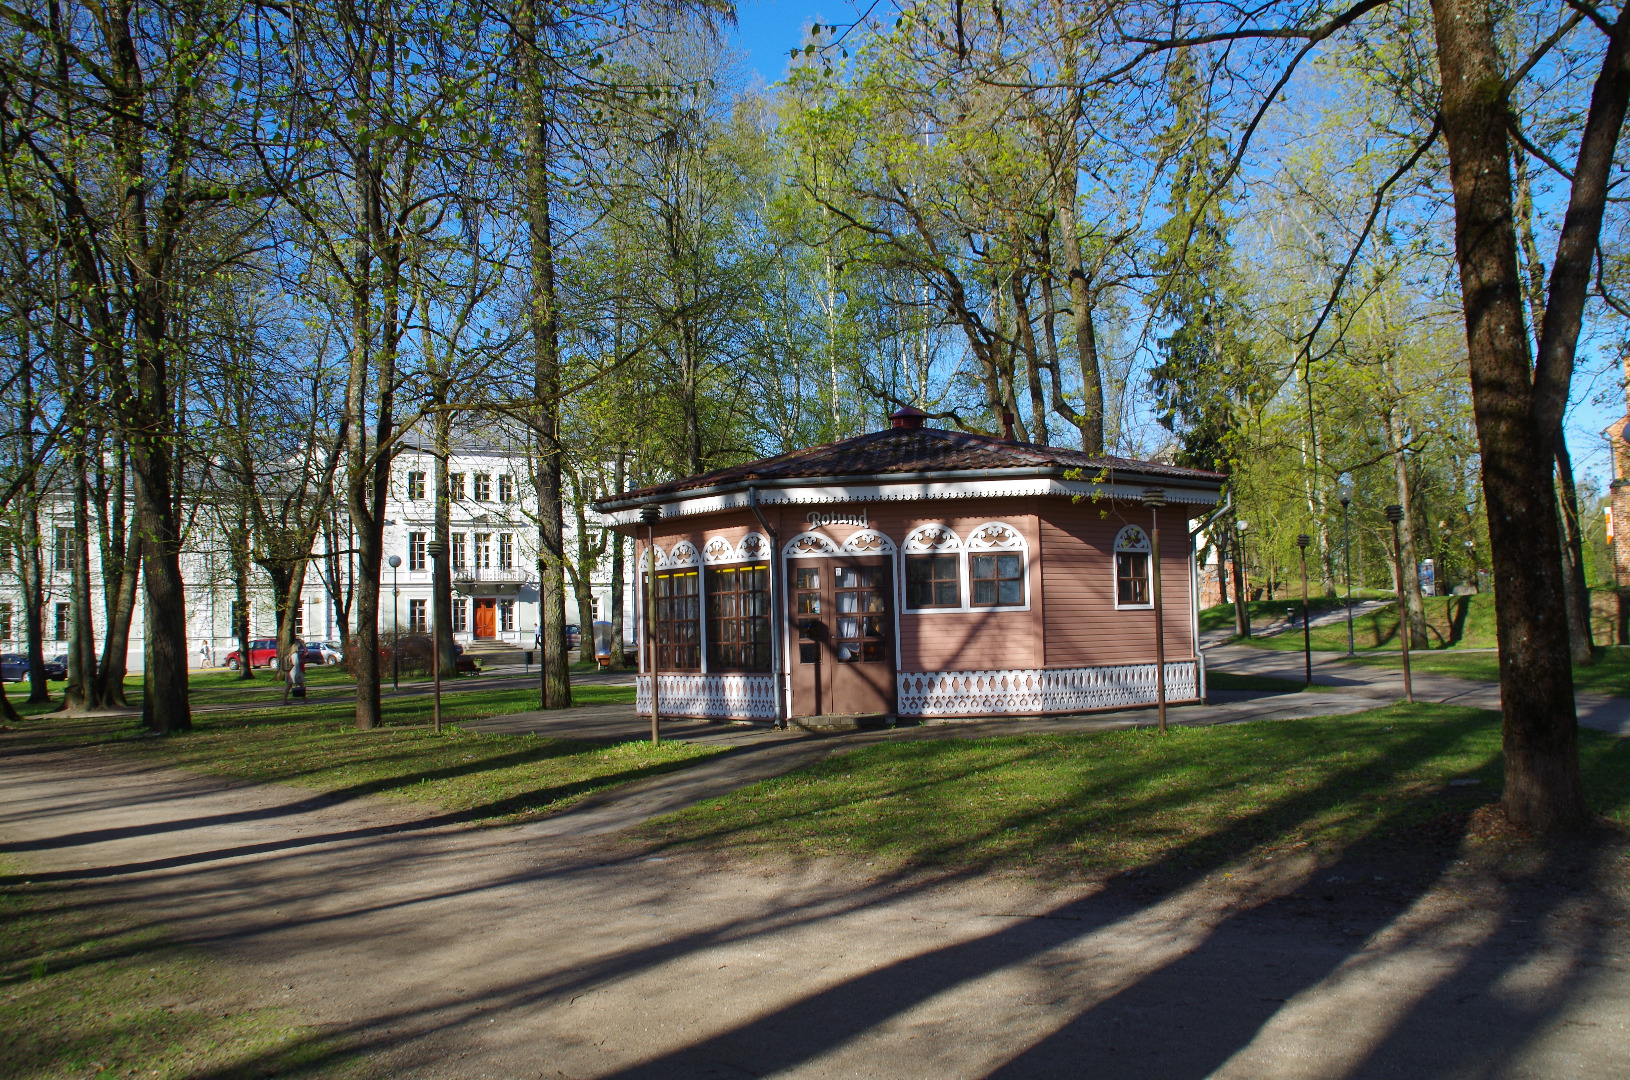 The Pavilion of Toomemäe rephoto